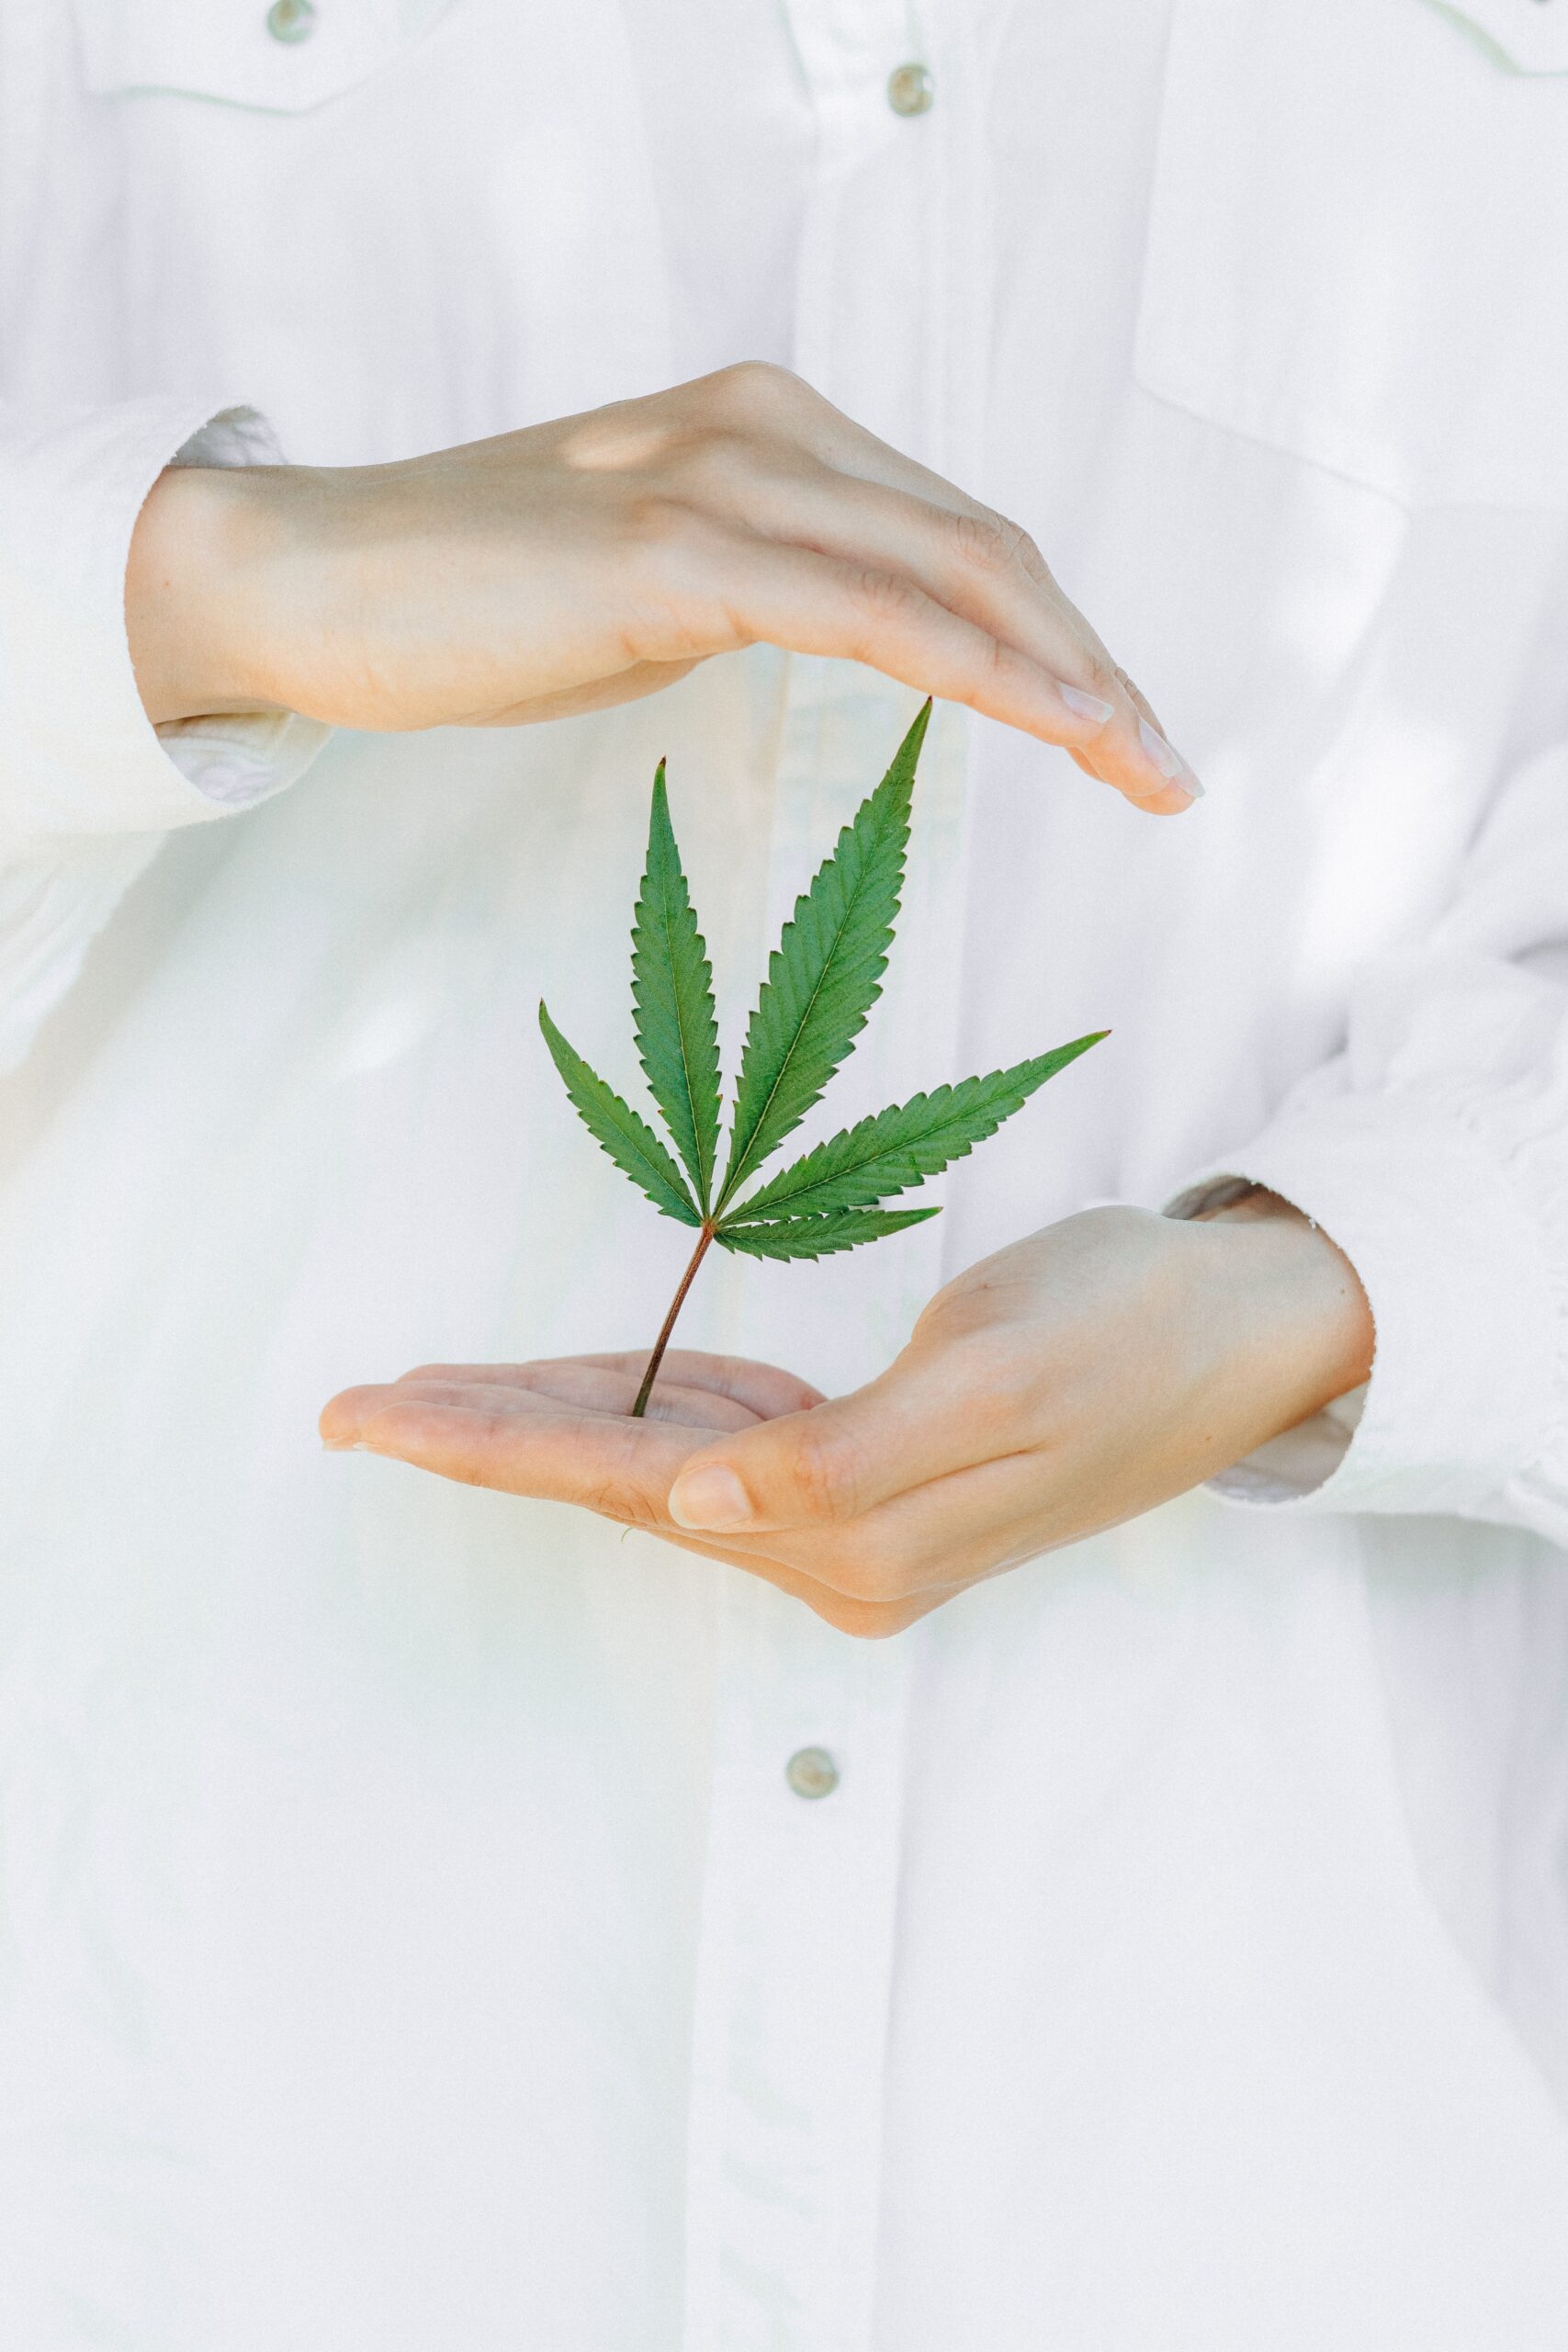 A Potential Cannabis Alternative in Kentucky